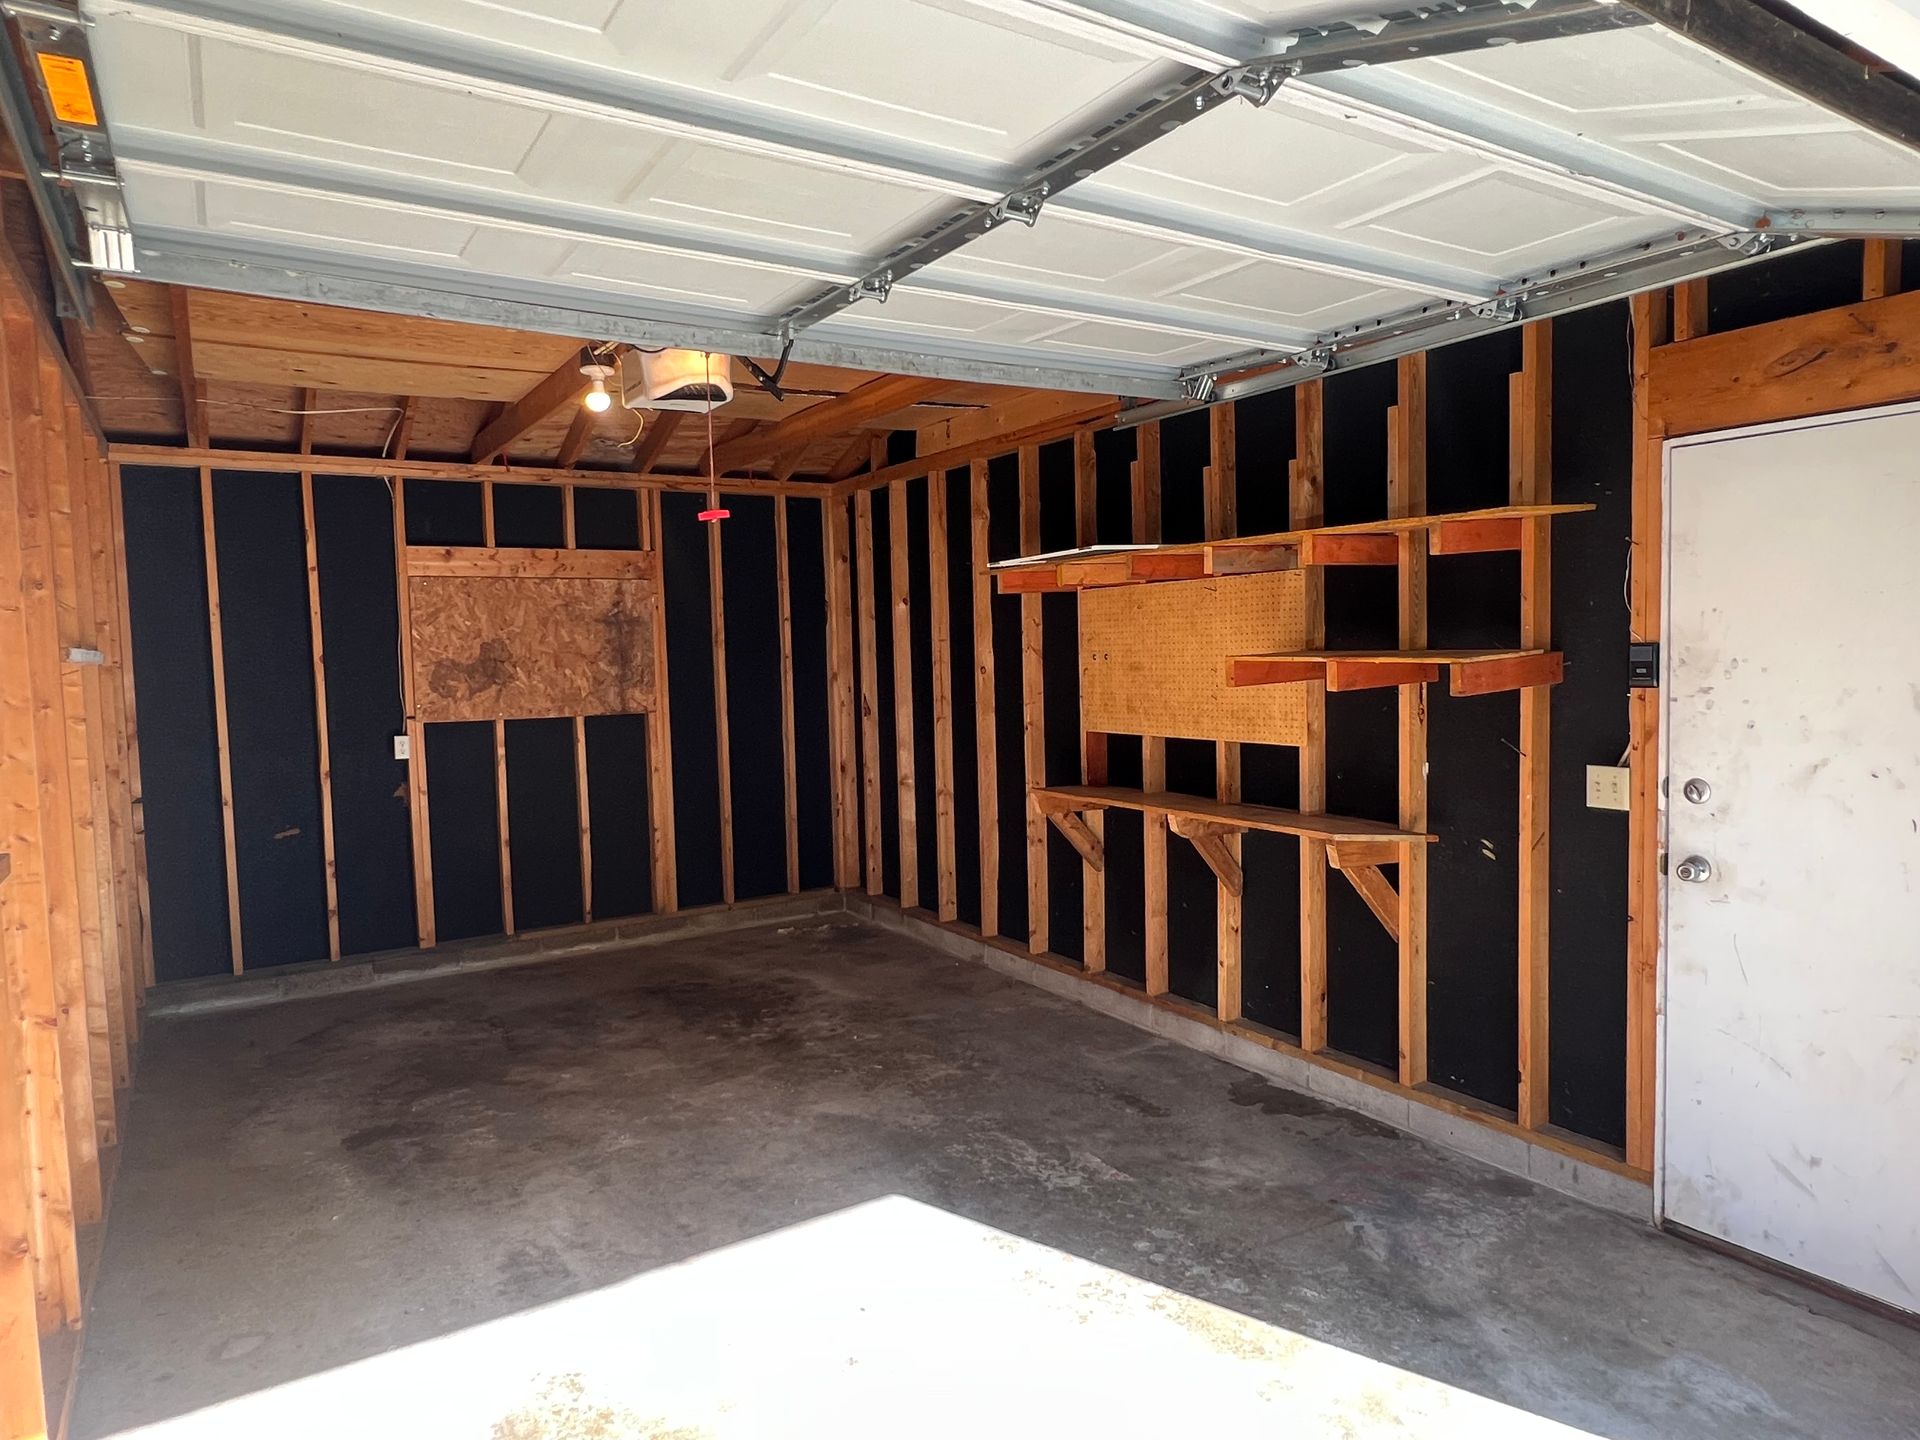 The inside of a garage with a garage door open